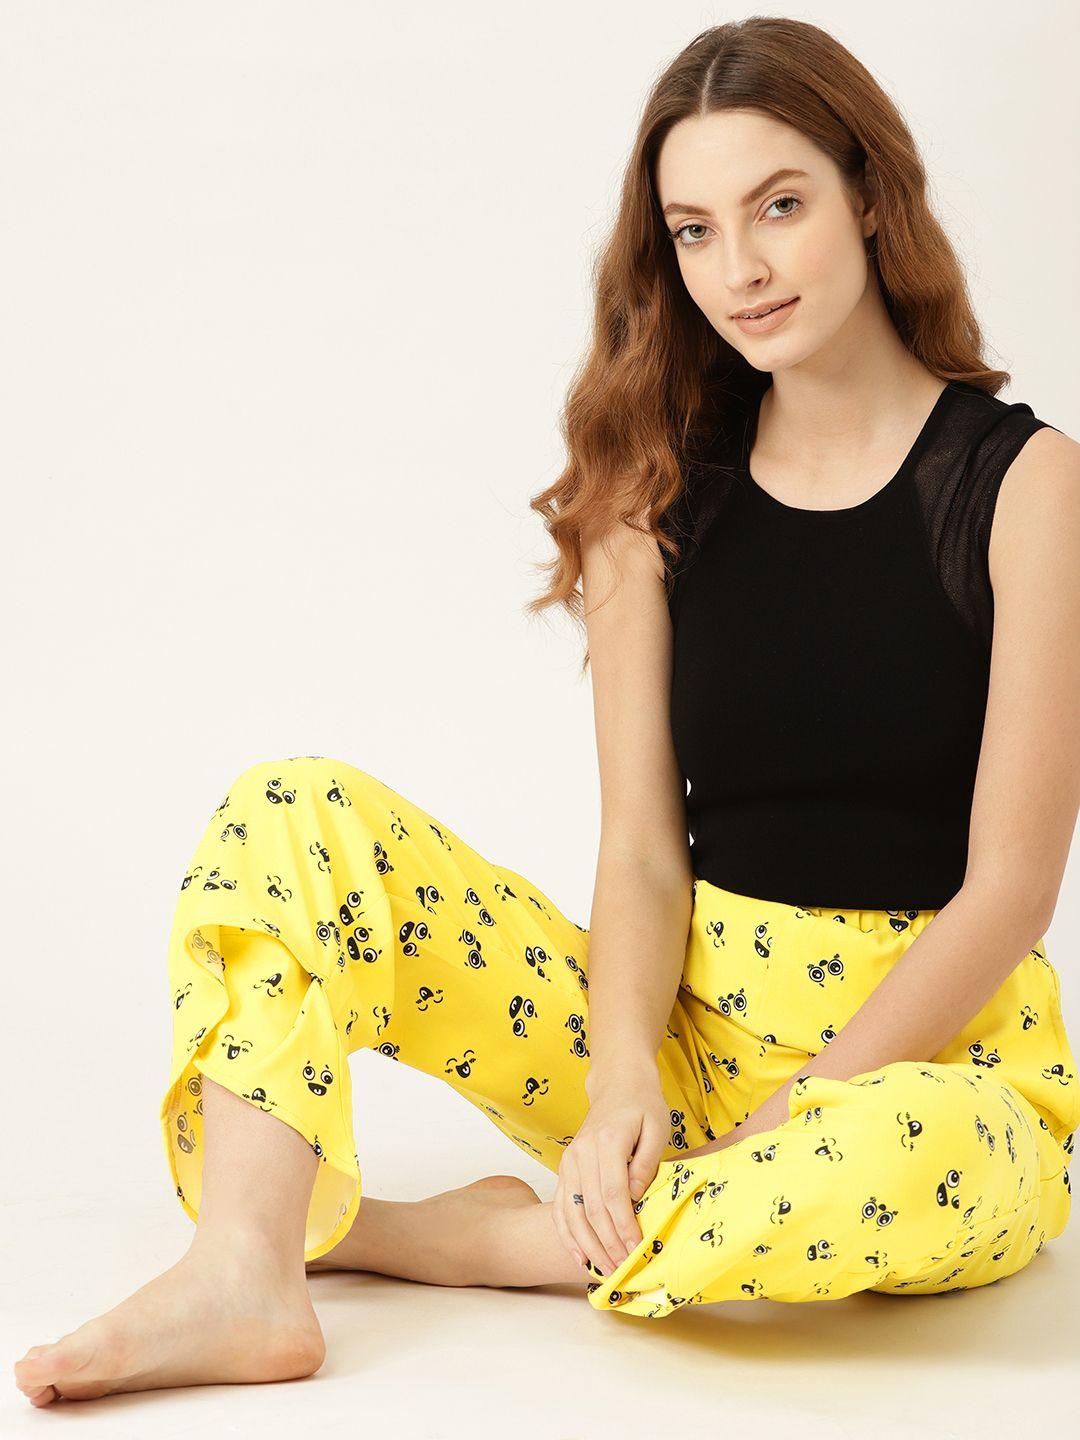 dressberry women yellow and black conversational print lounge pants